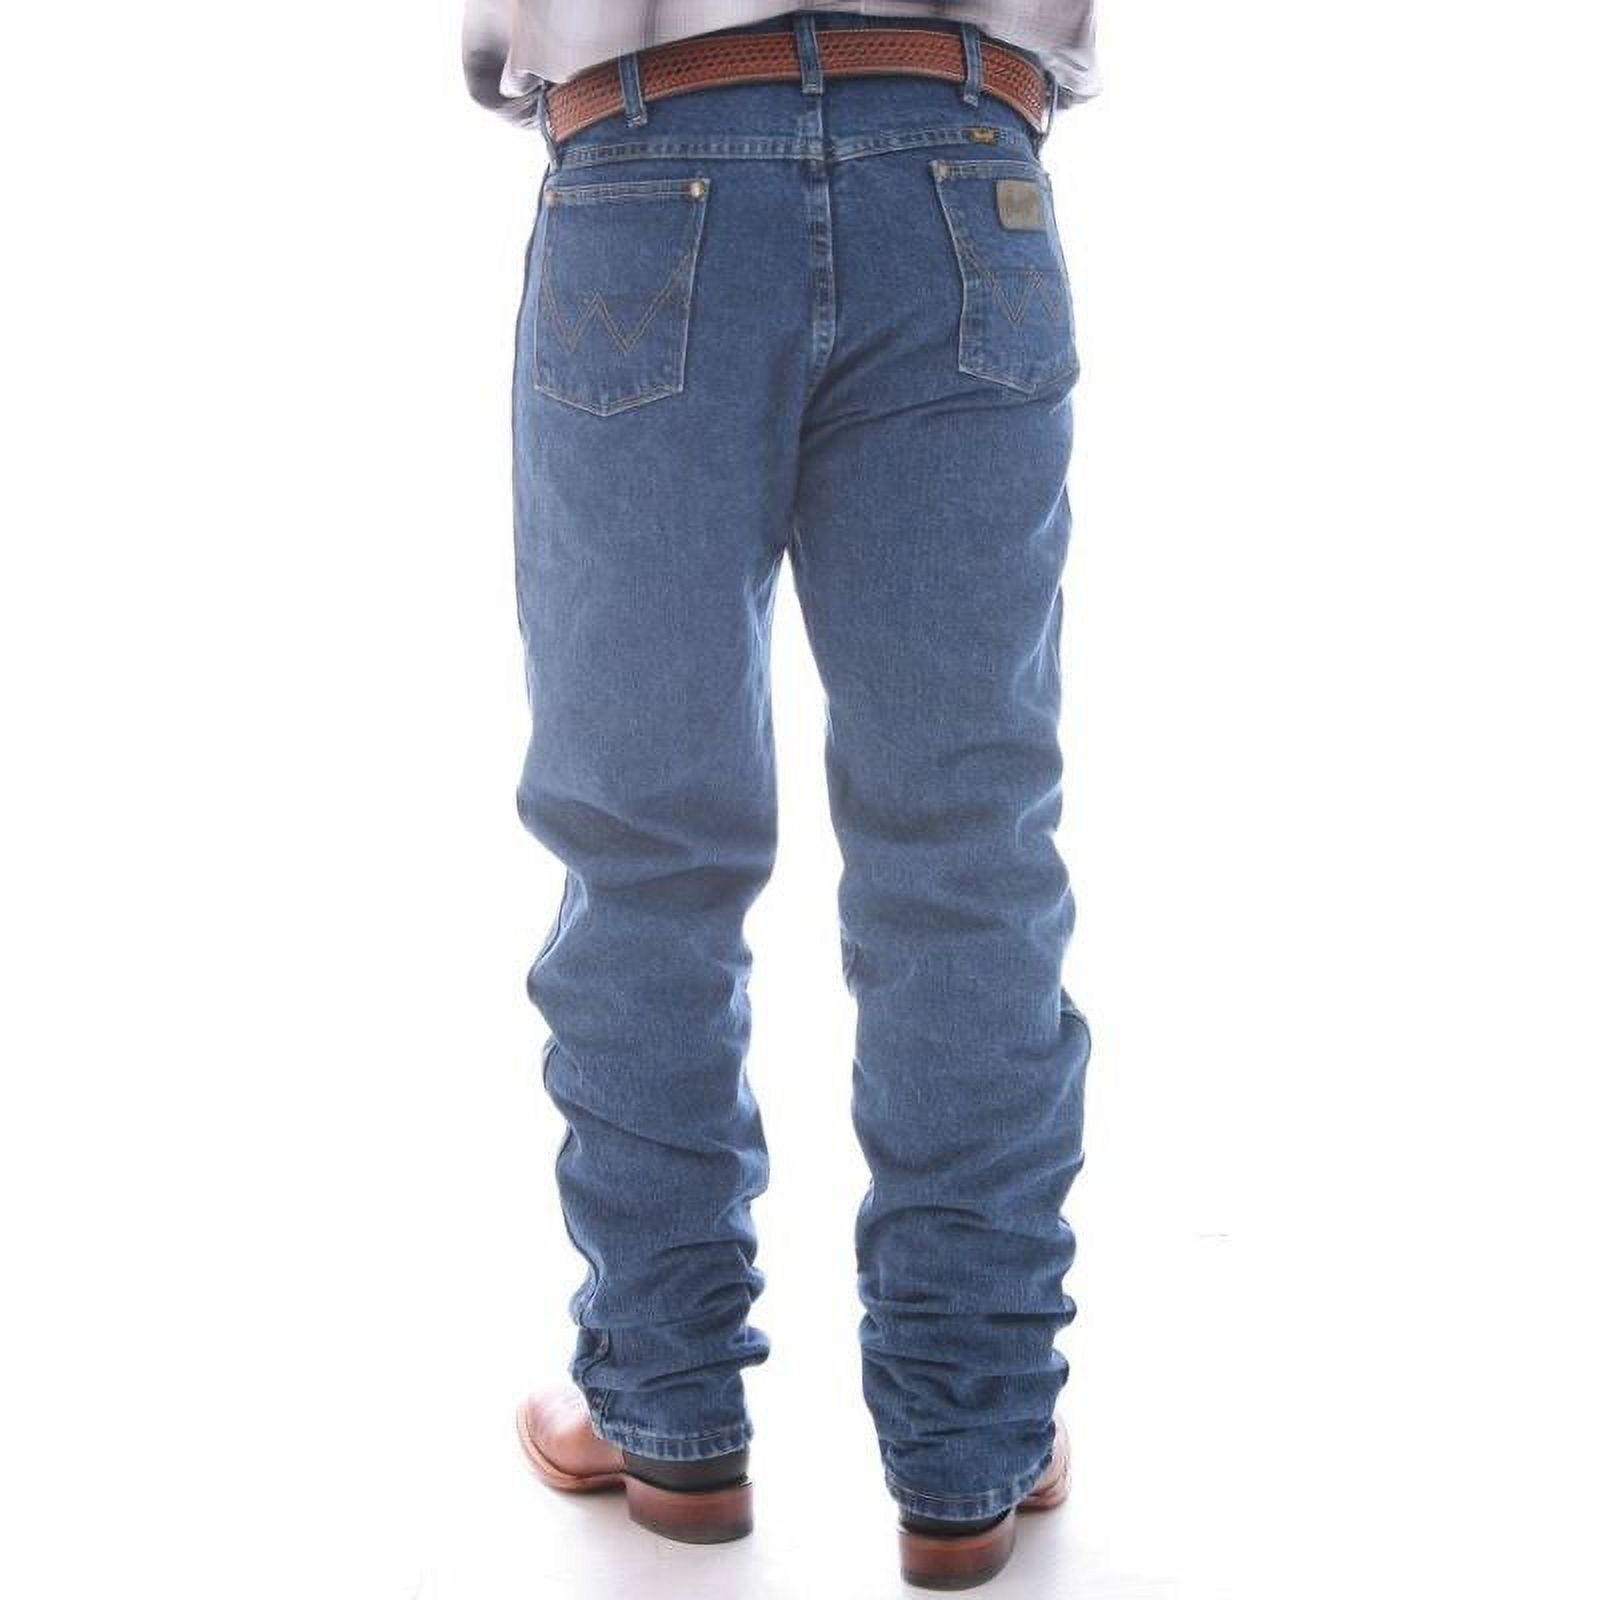 Wrangler George Strait Regular Fit - Mens Jeans  - 13Mgshd - image 1 of 4